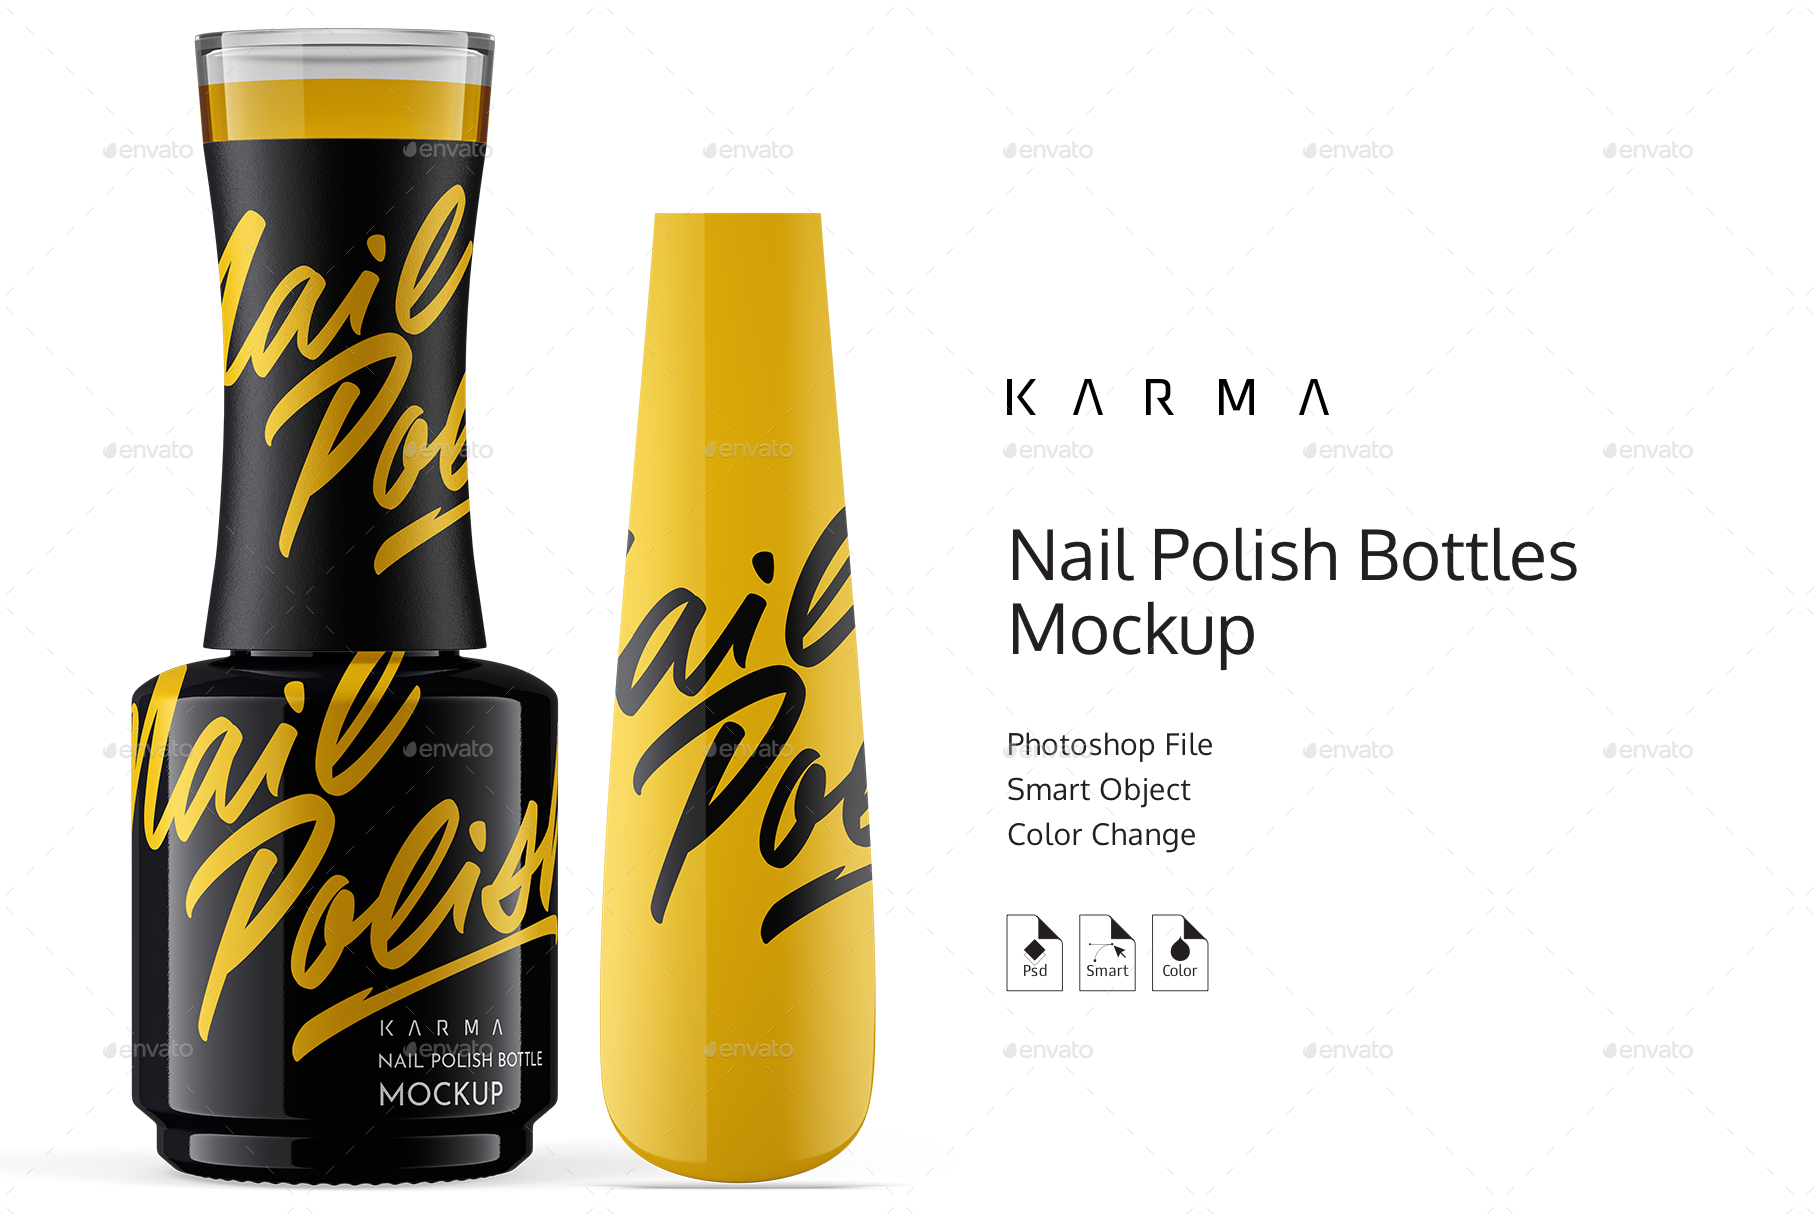 Download Nail Polish Bottles Mockup by KarmaStore | GraphicRiver